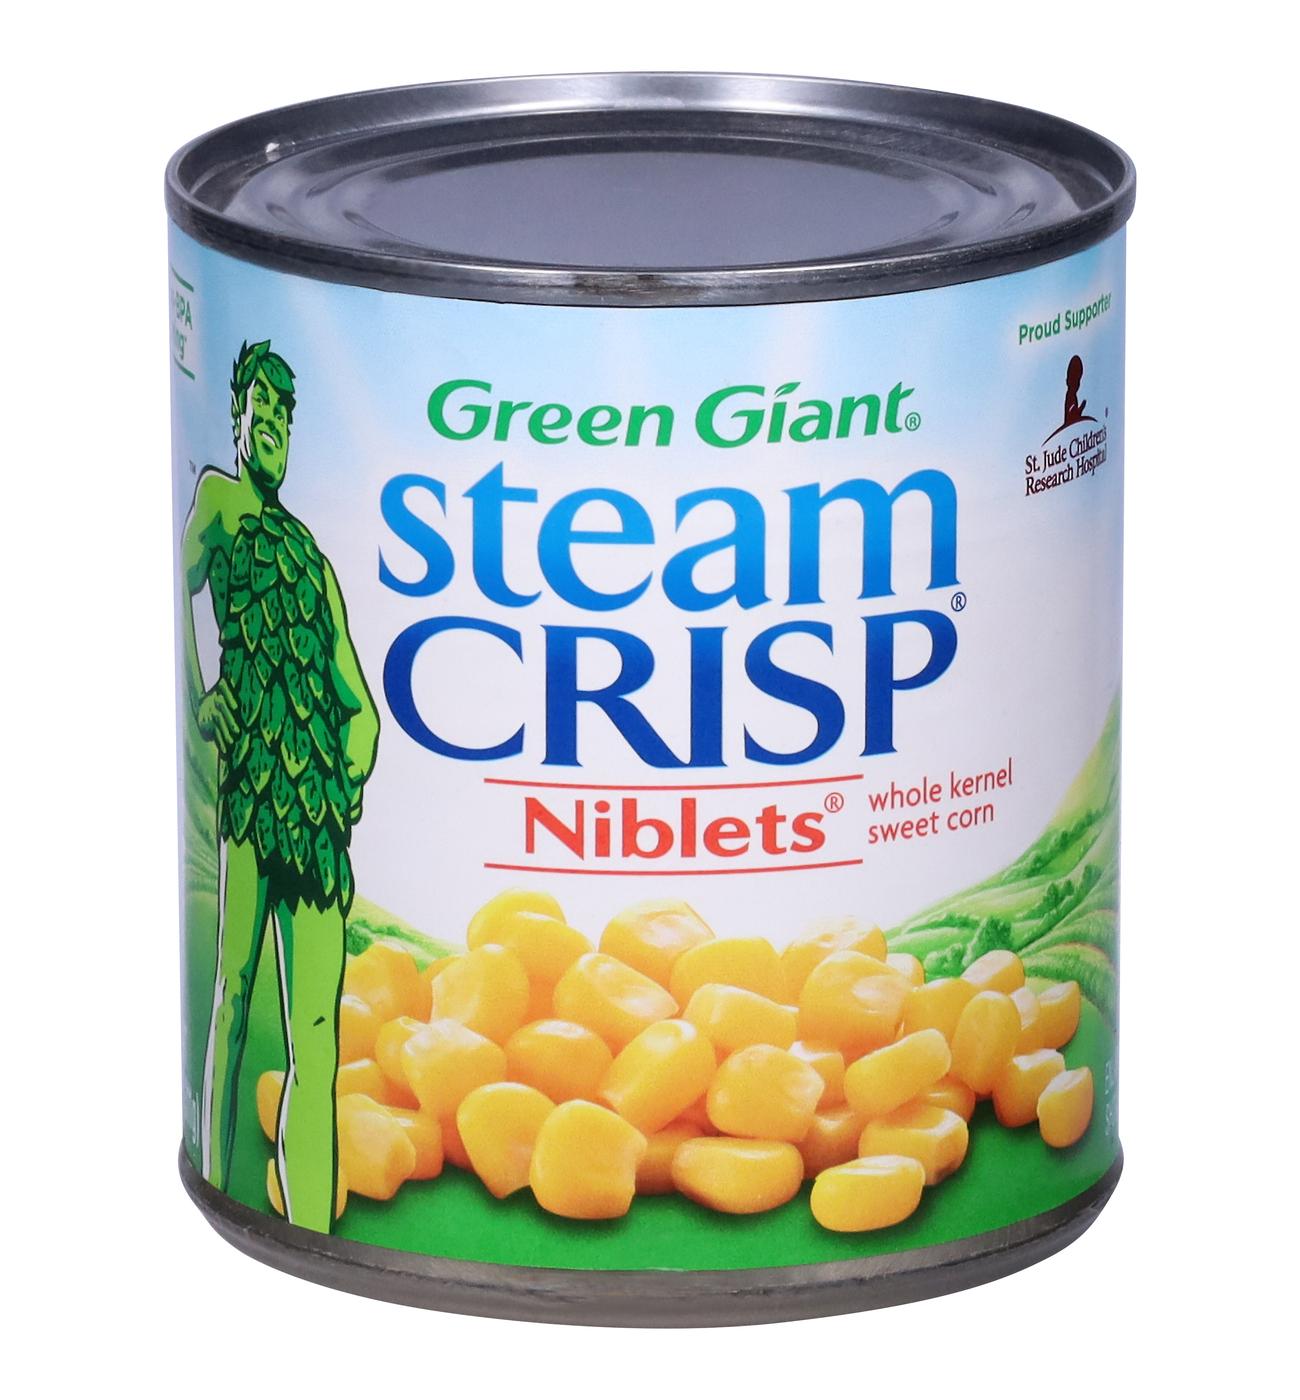 Green Giant Steam Crisp Whole Kernel Sweet Corn Niblets; image 1 of 3